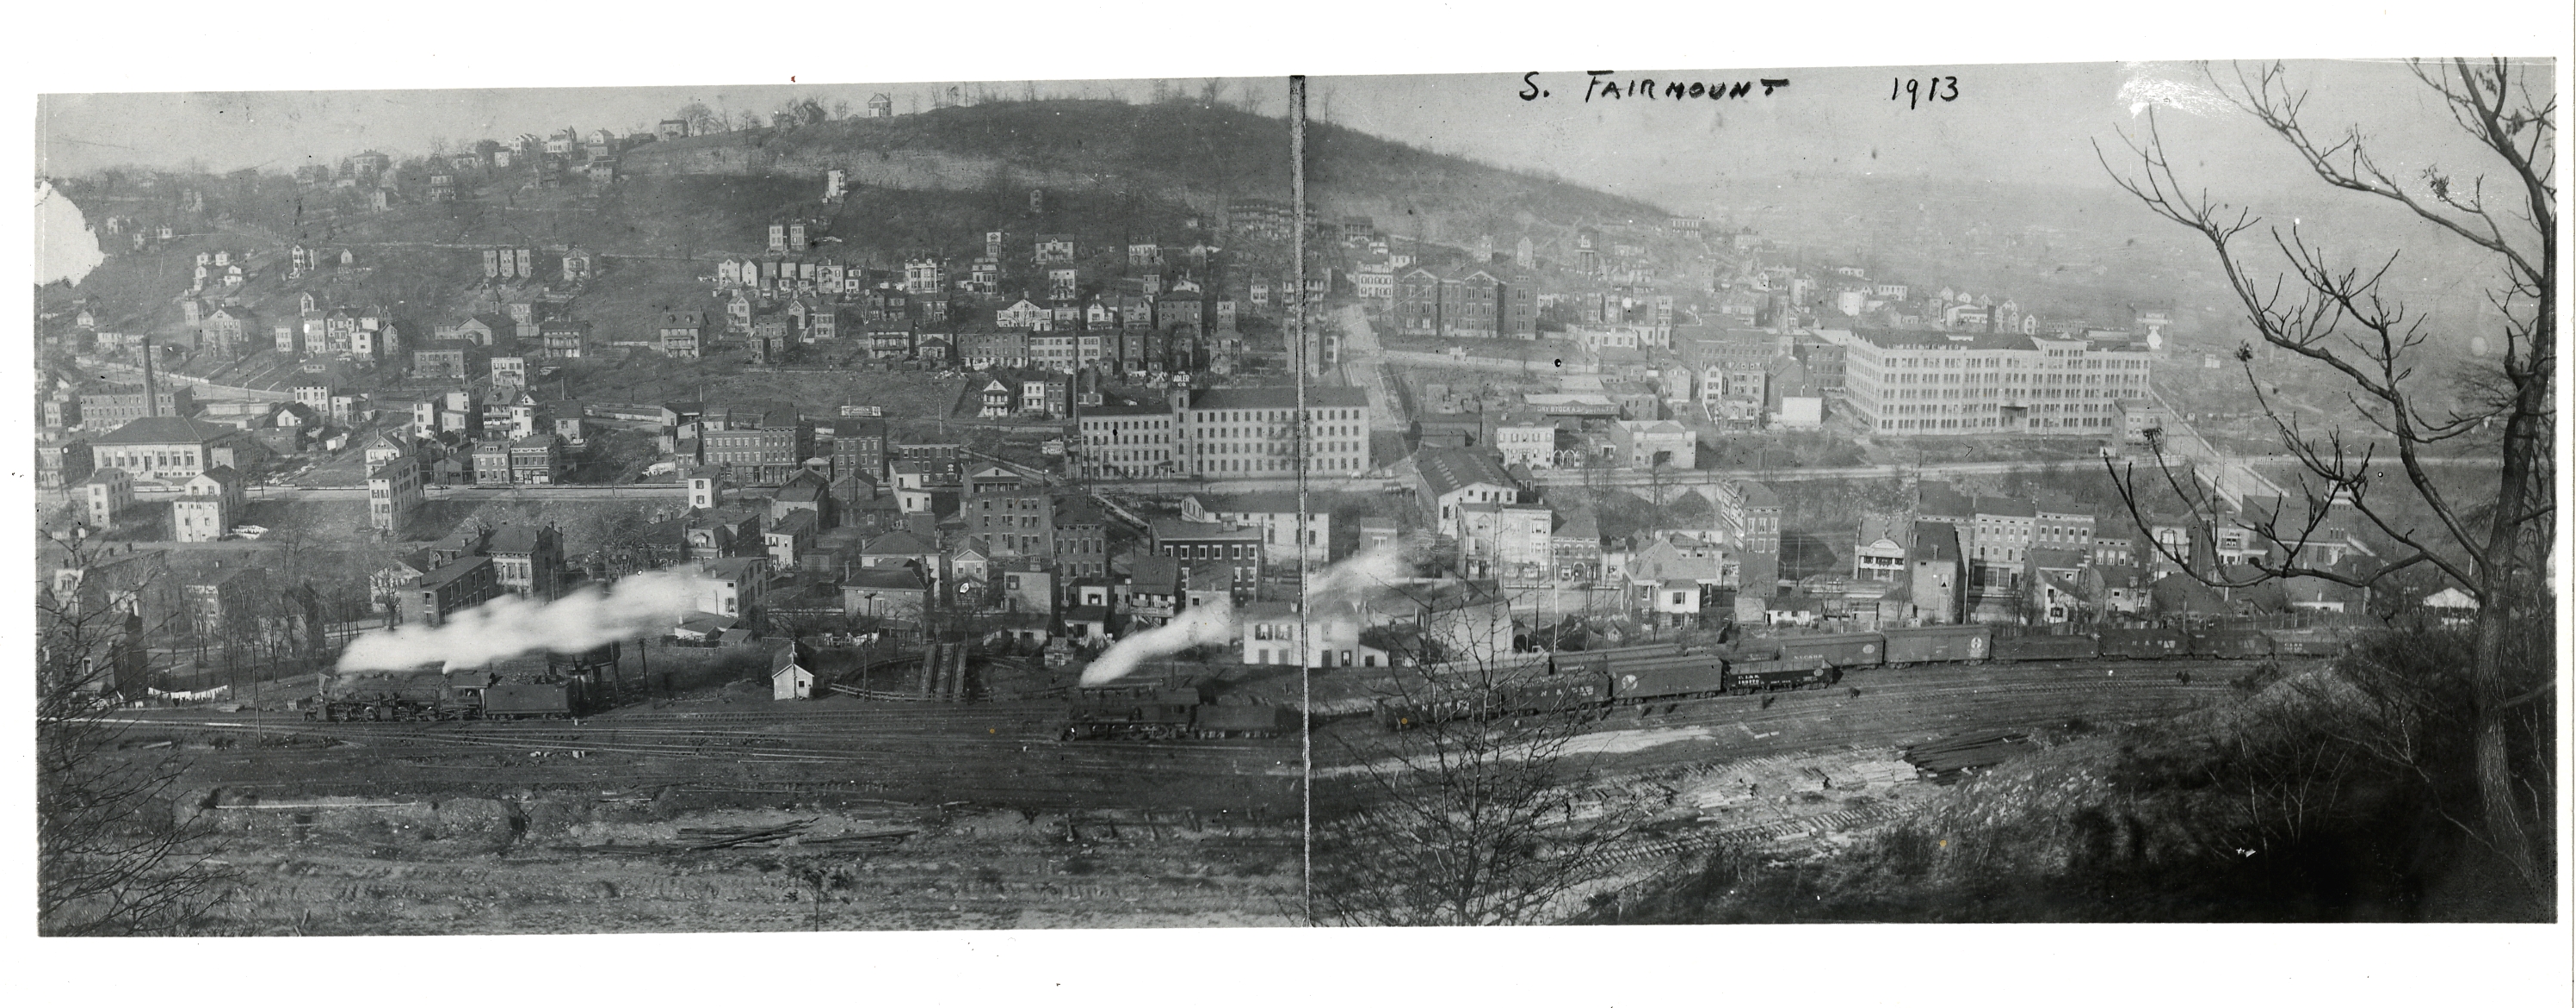 1913 photo of South Fairmount